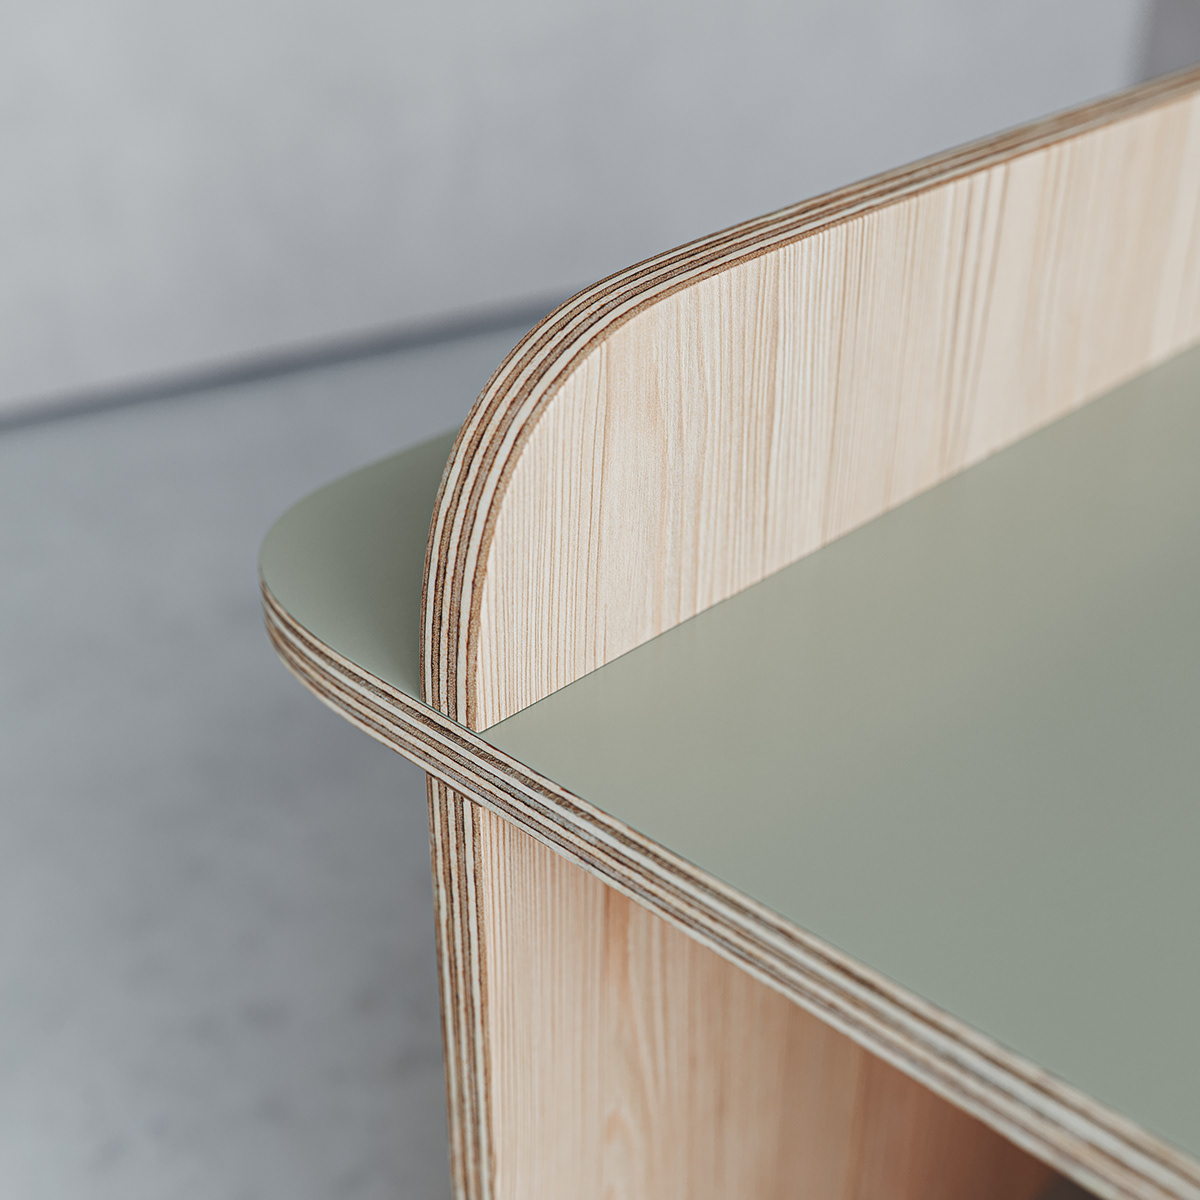 3D CGI furniture design  minimal plywood product product viz Render Scandinavian visualization